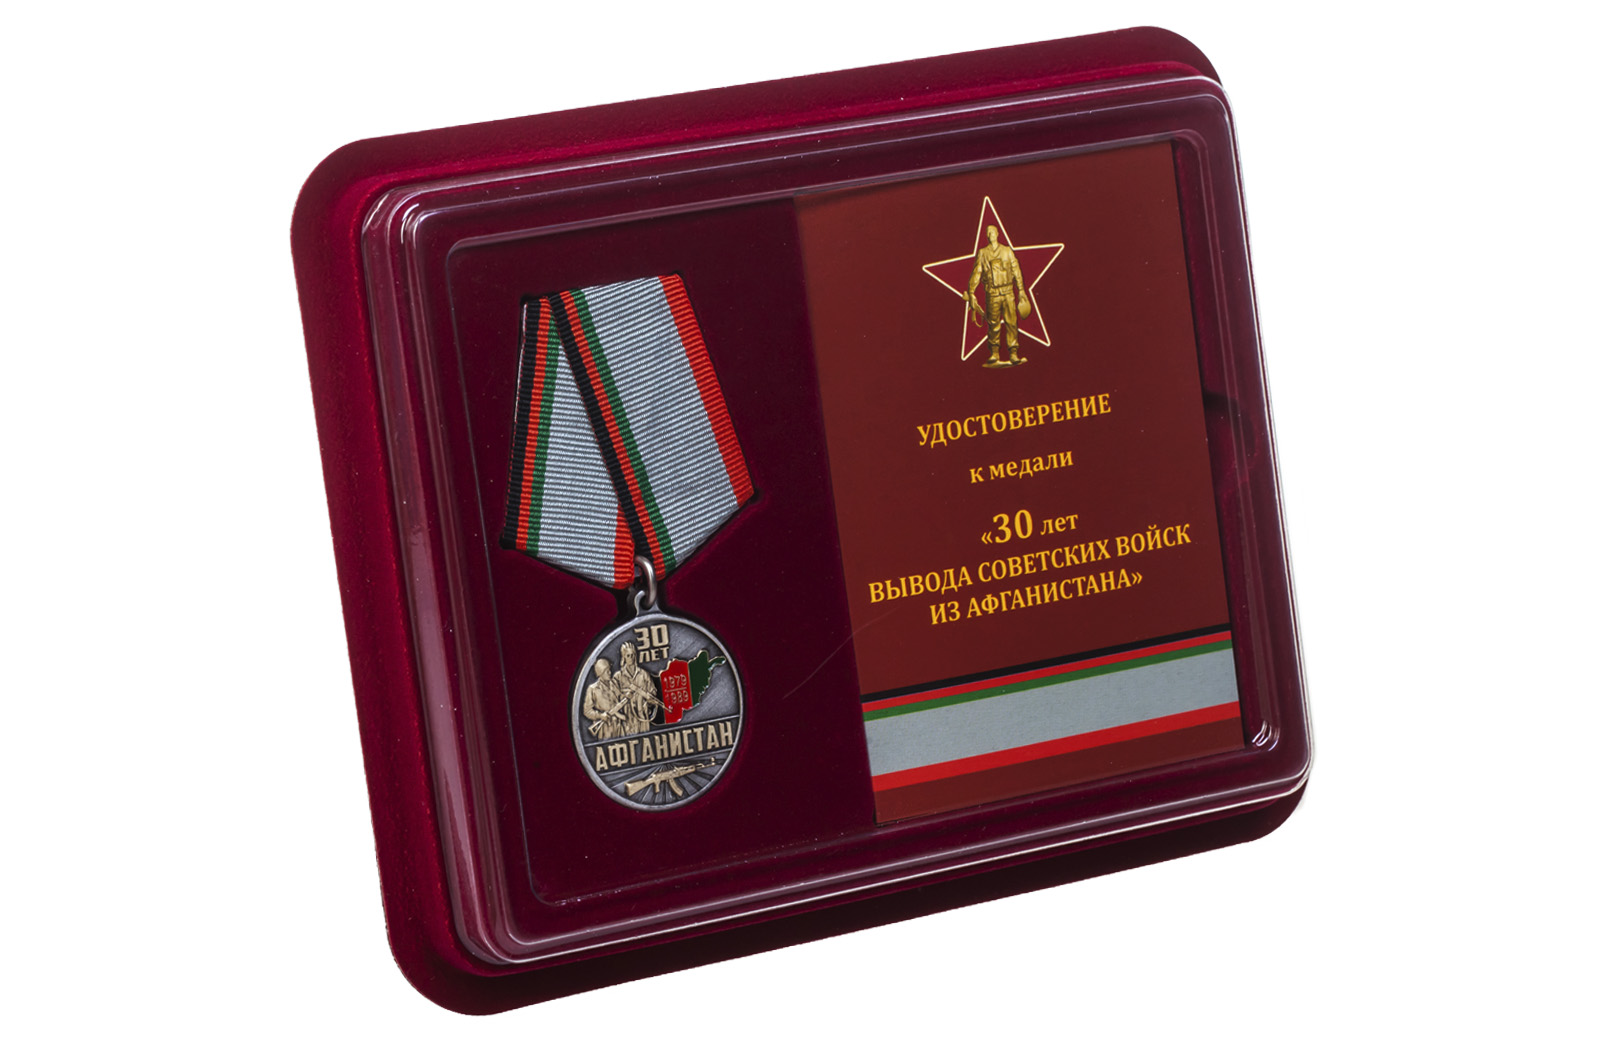 Памятная медаль "30 лет. Афганистан" 